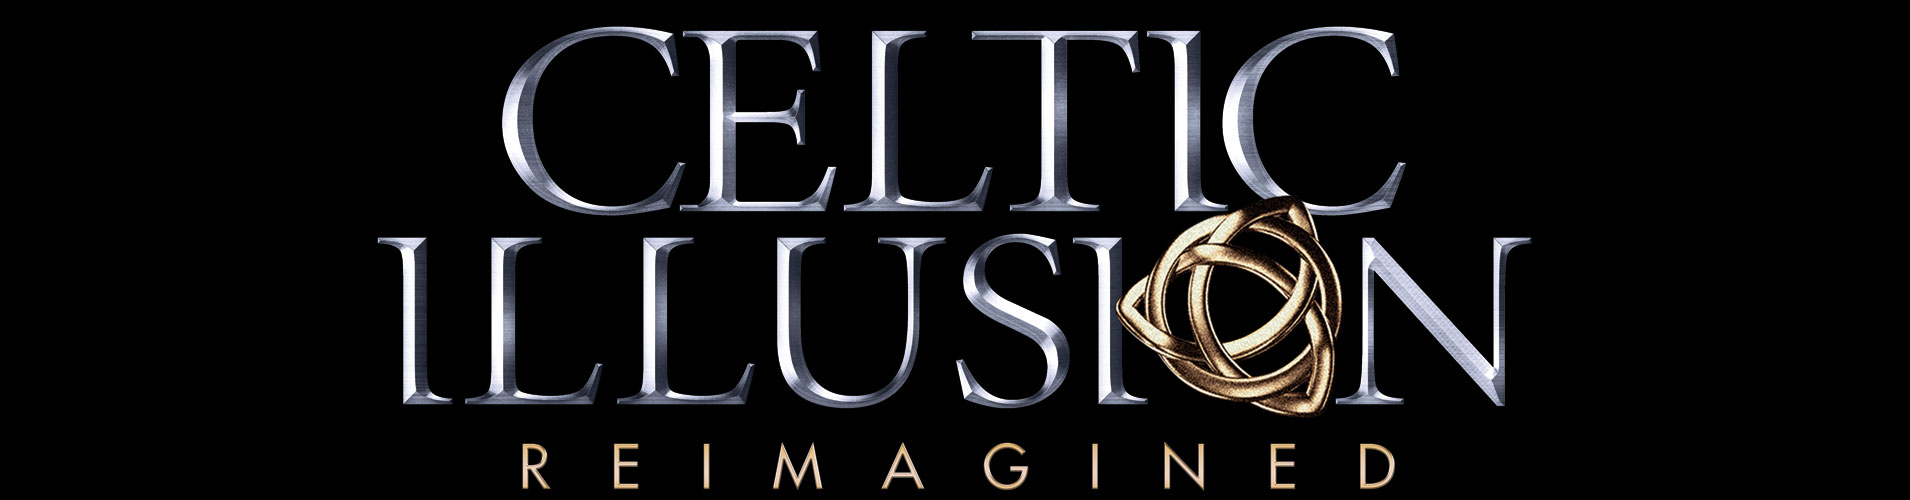 CelticIllusion-Reimagined-1090x500-Banner.jpg